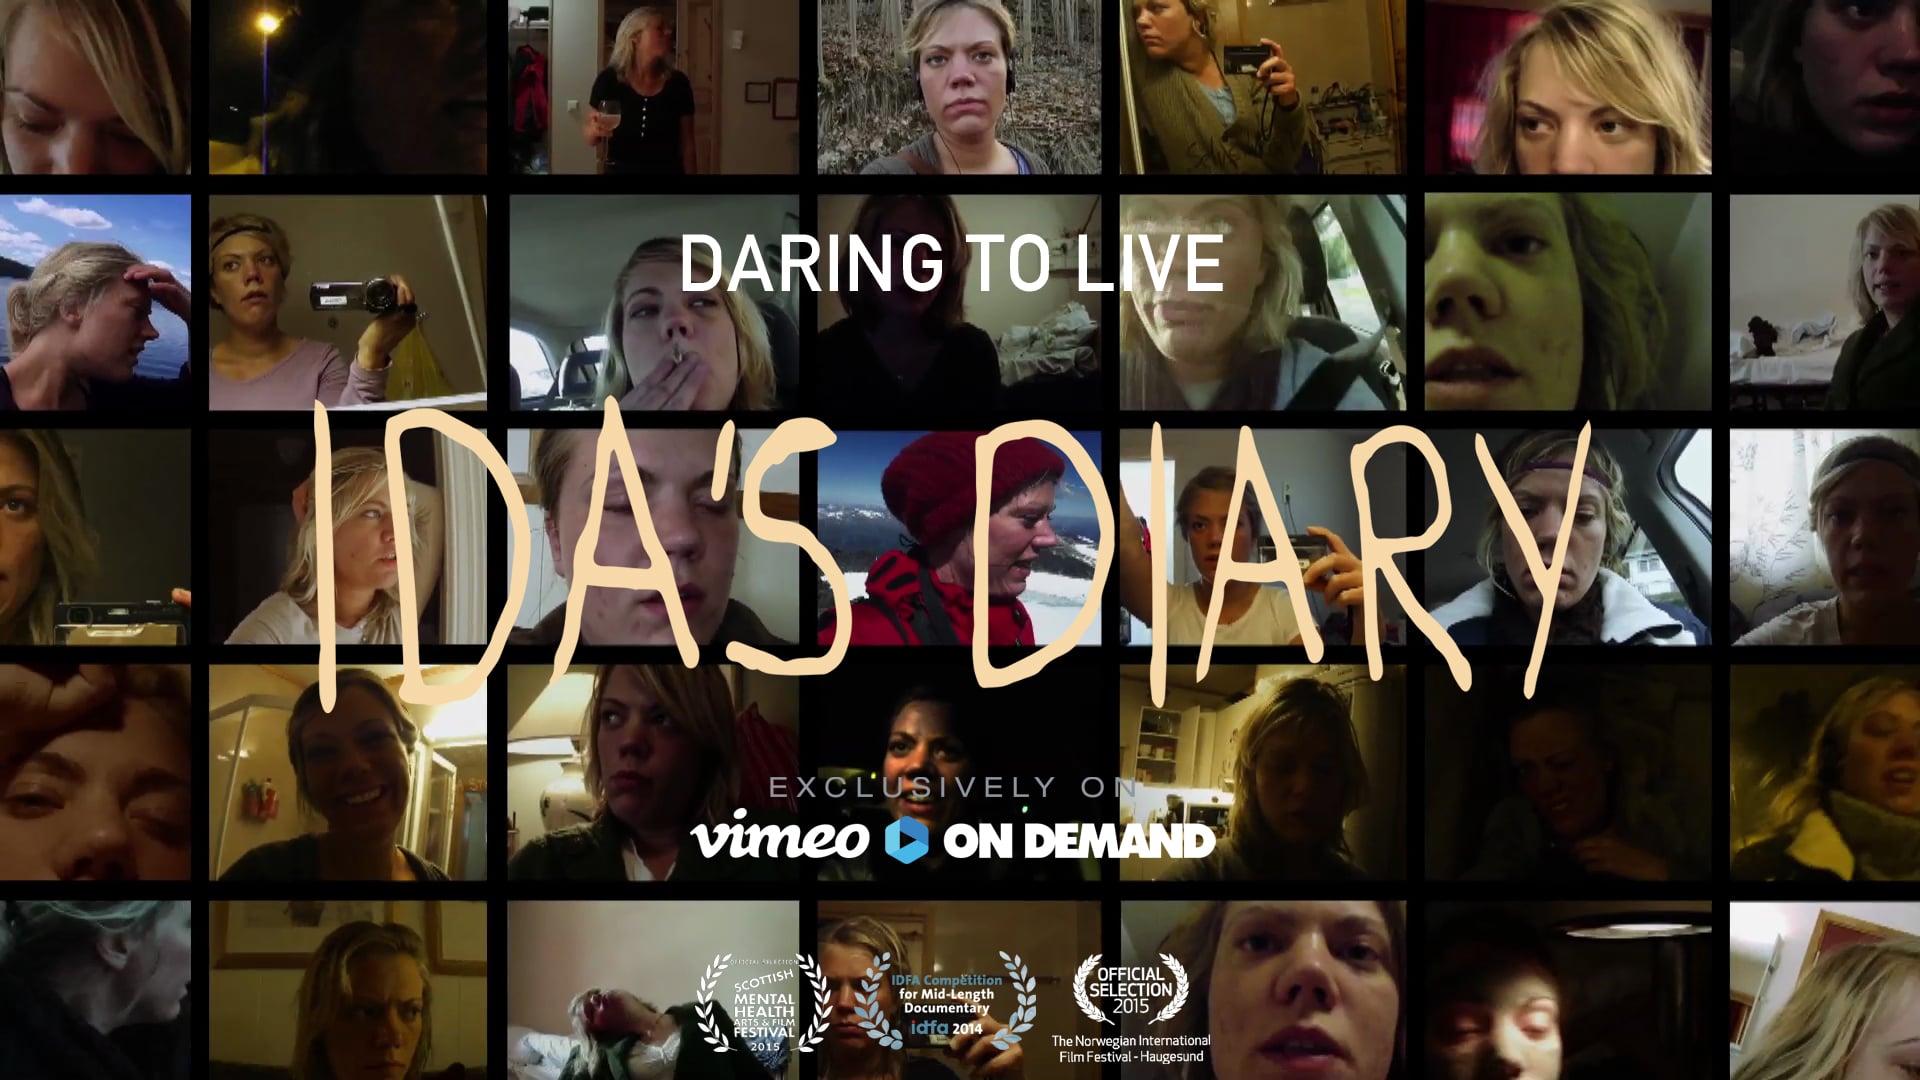 Watch Idas Diary Online Vimeo On Demand on Vimeo